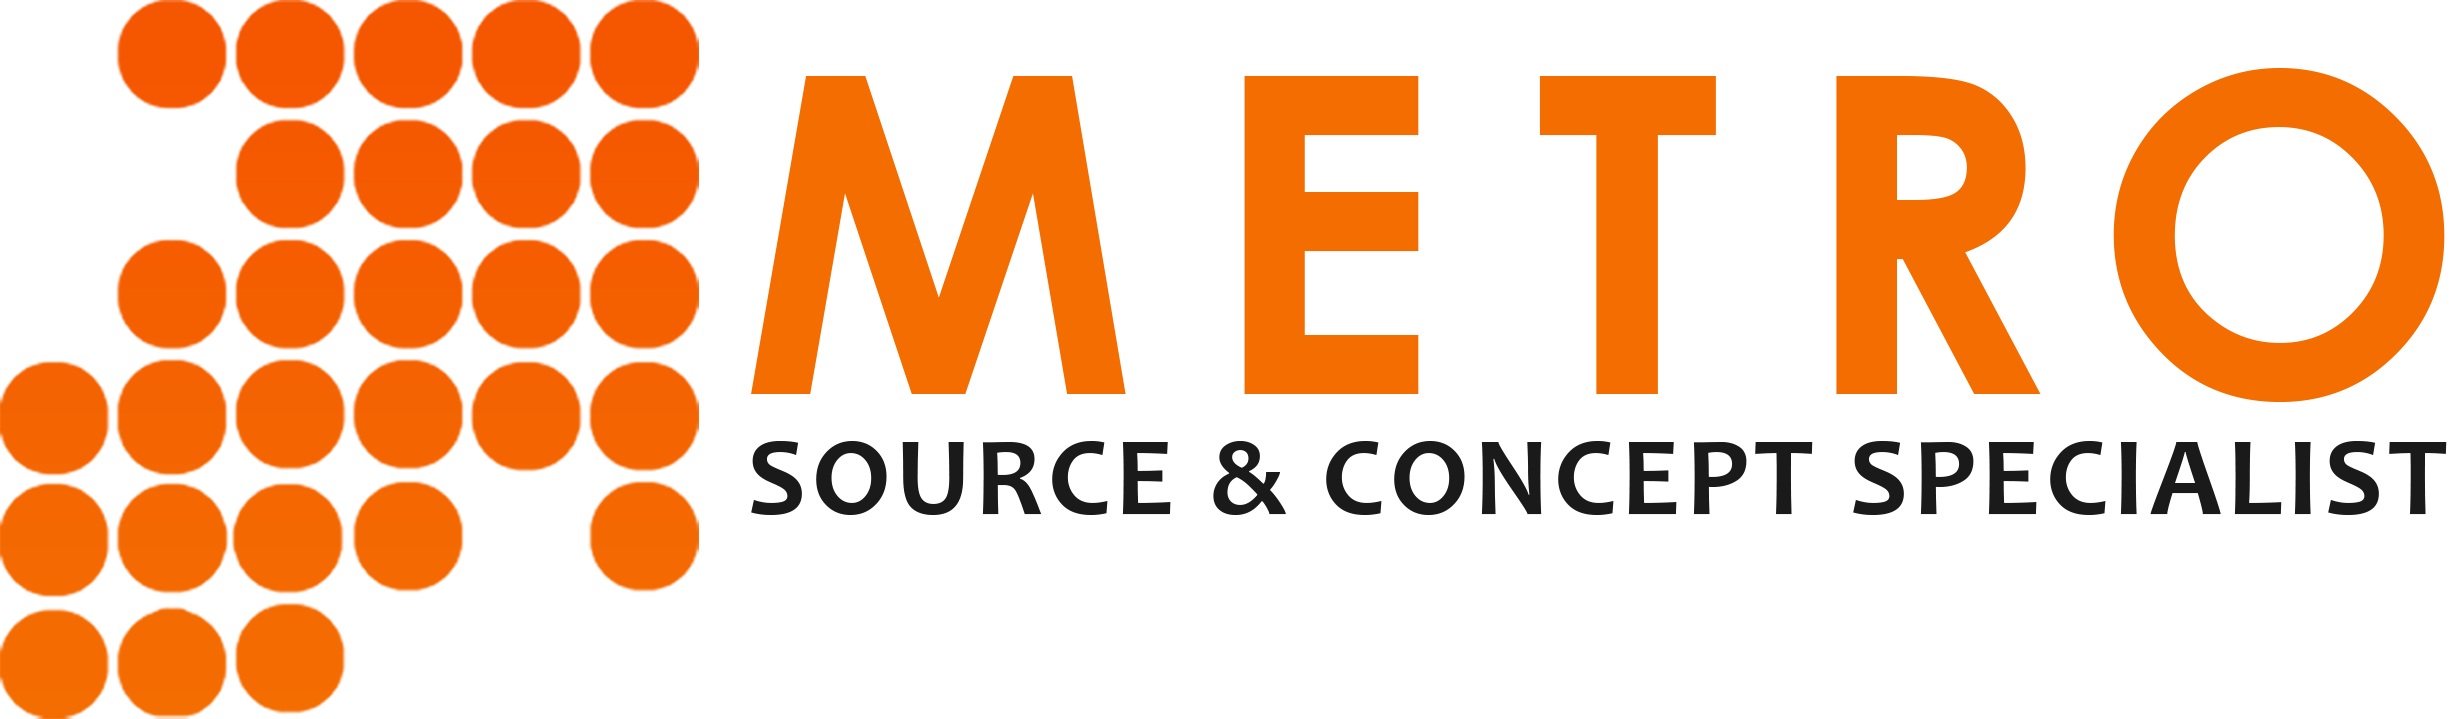 Metro Source & Concept Specialist